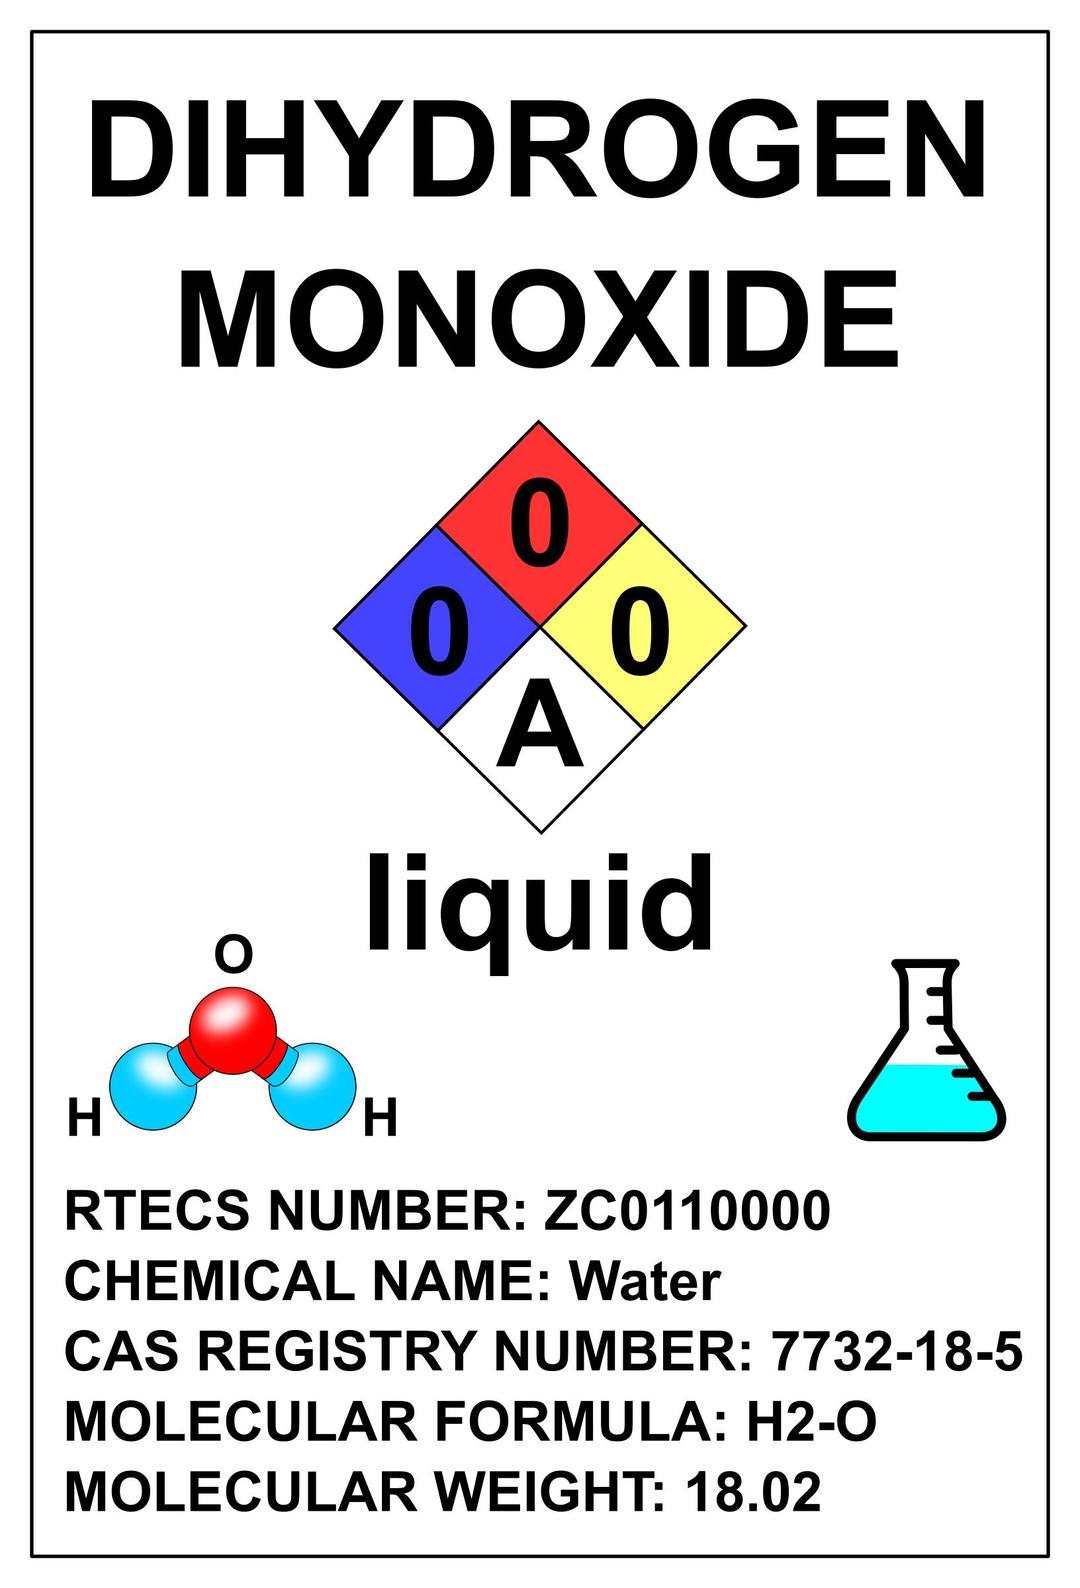 Dihydrogen monoxide - funny water bottle label png transparent